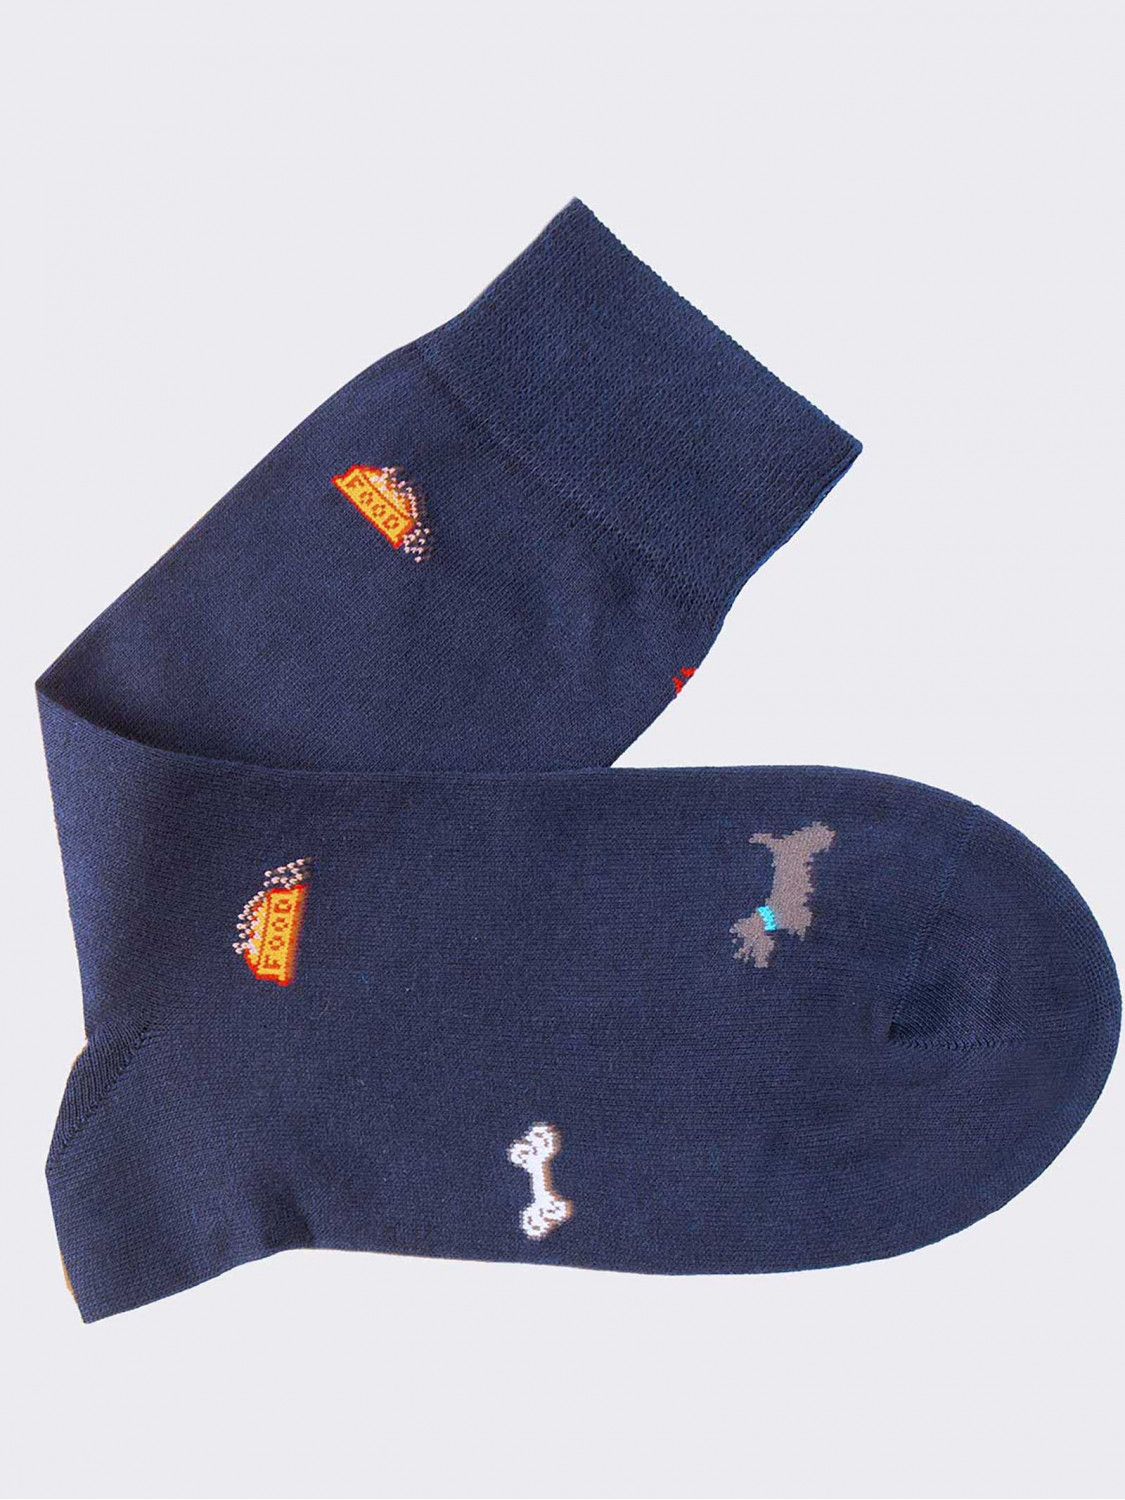 Crew socks with dog pattern